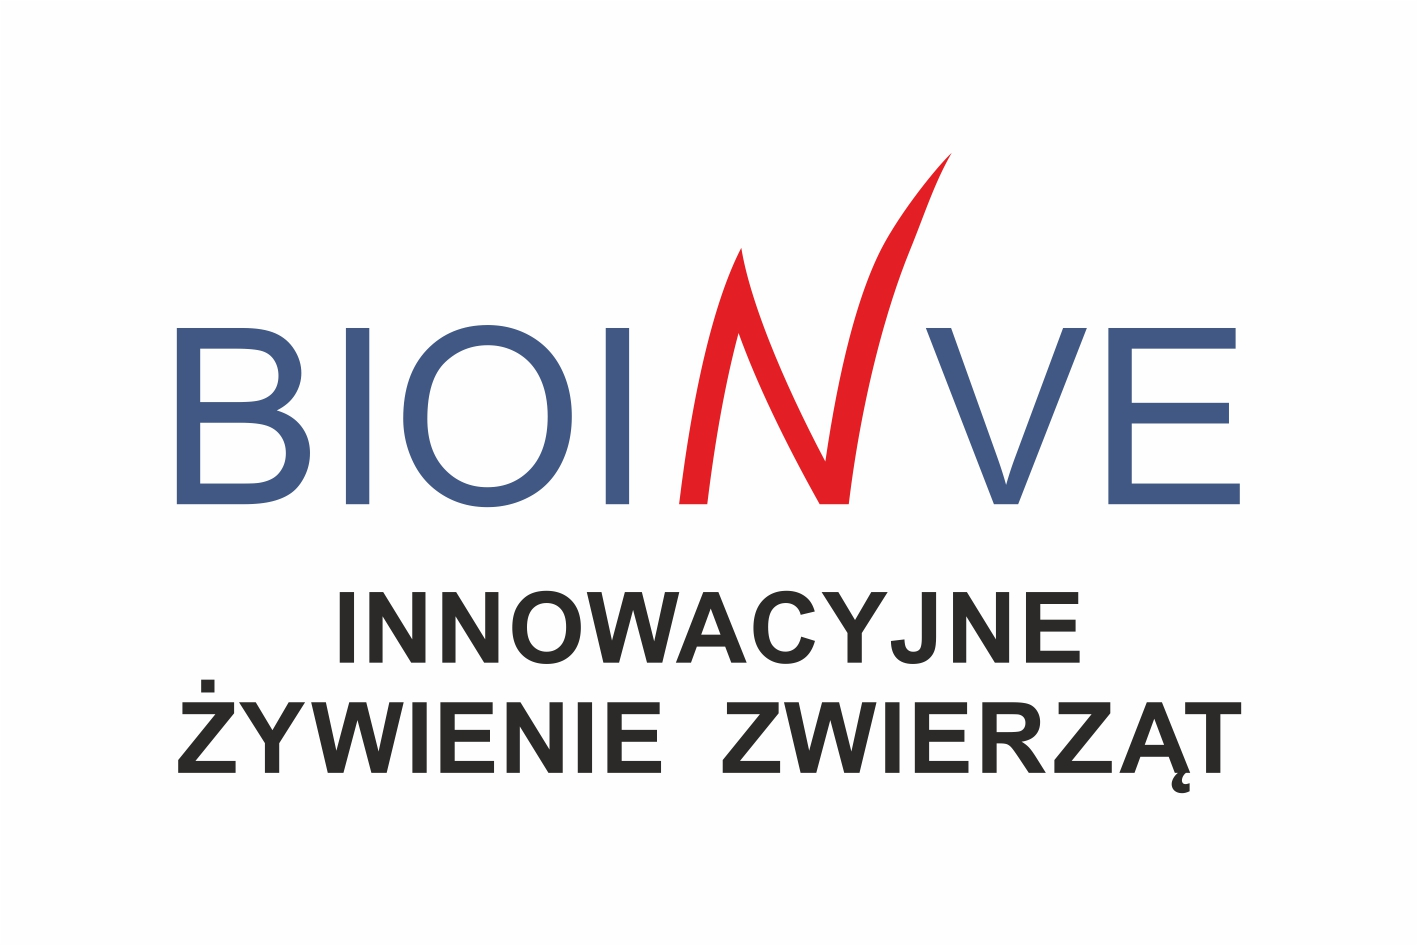 Company logo BIOINVE